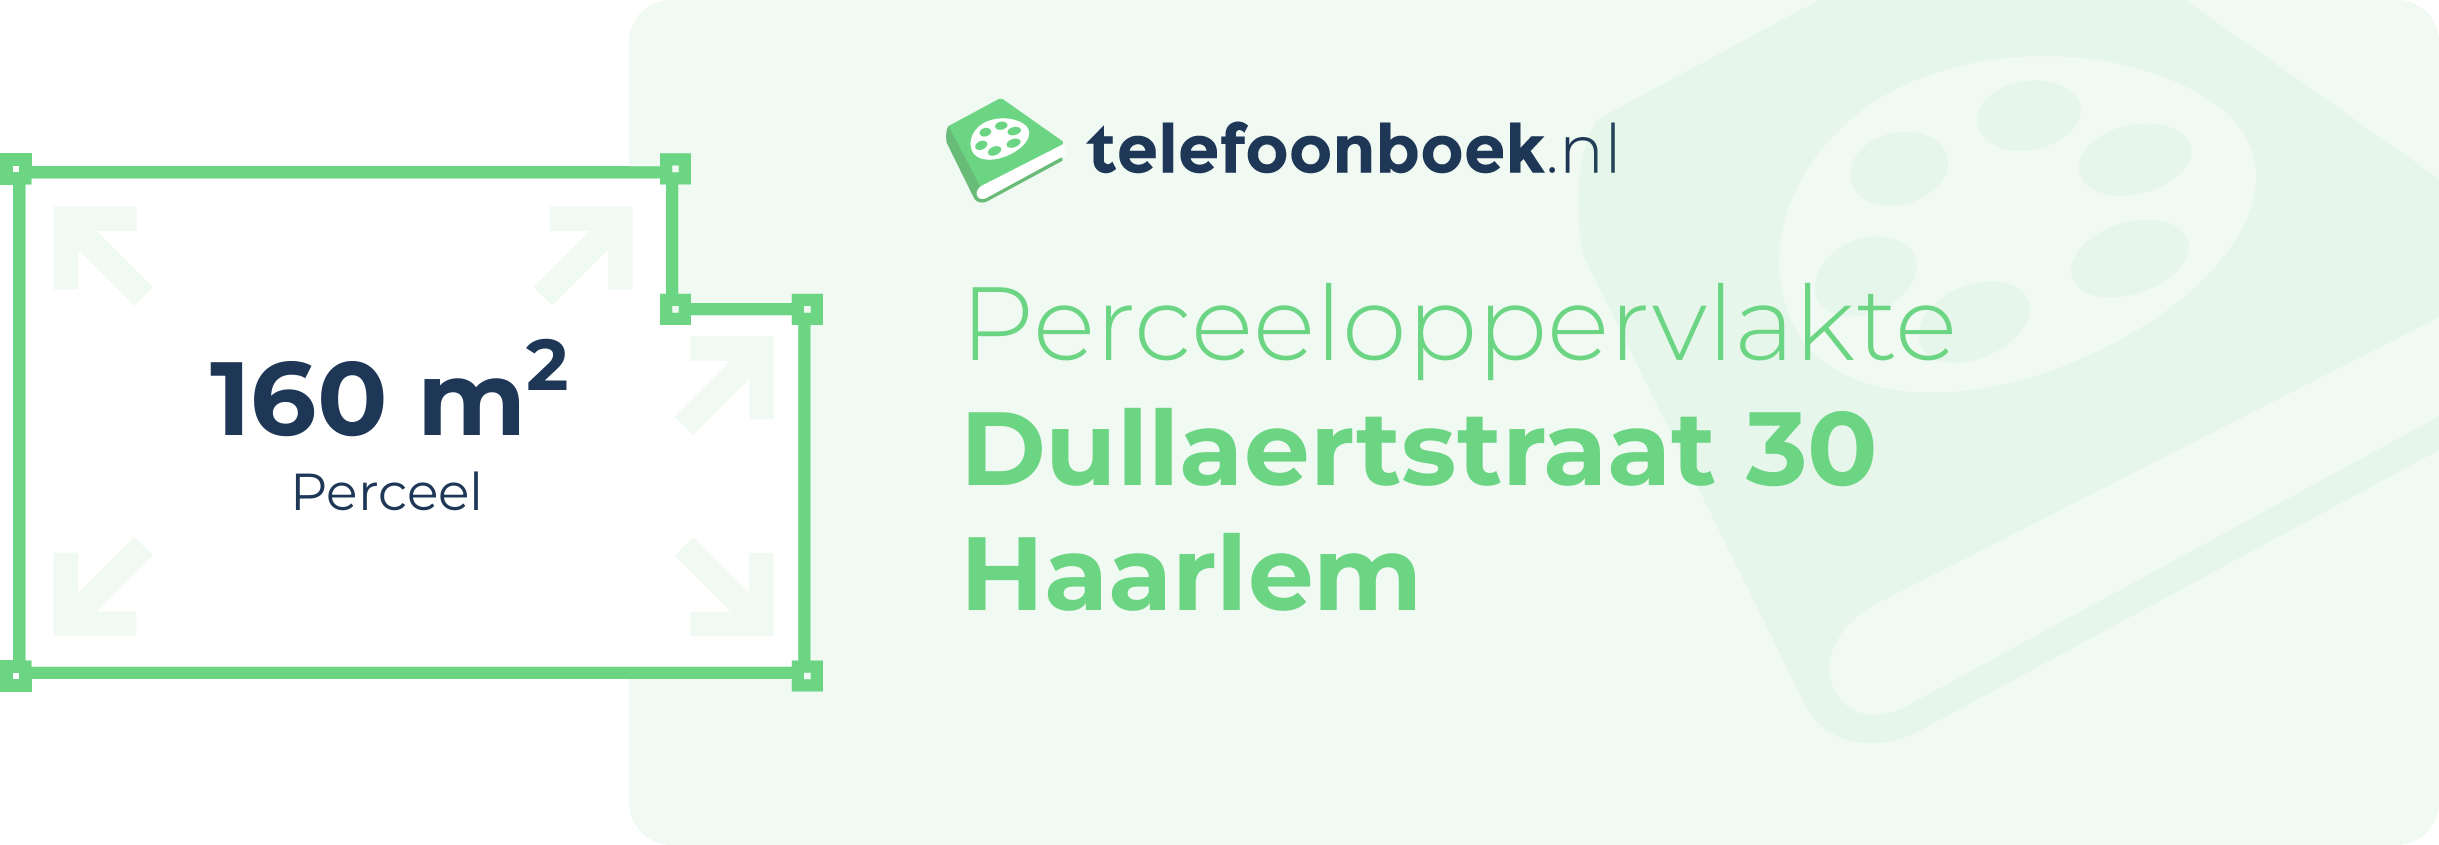 Perceeloppervlakte Dullaertstraat 30 Haarlem